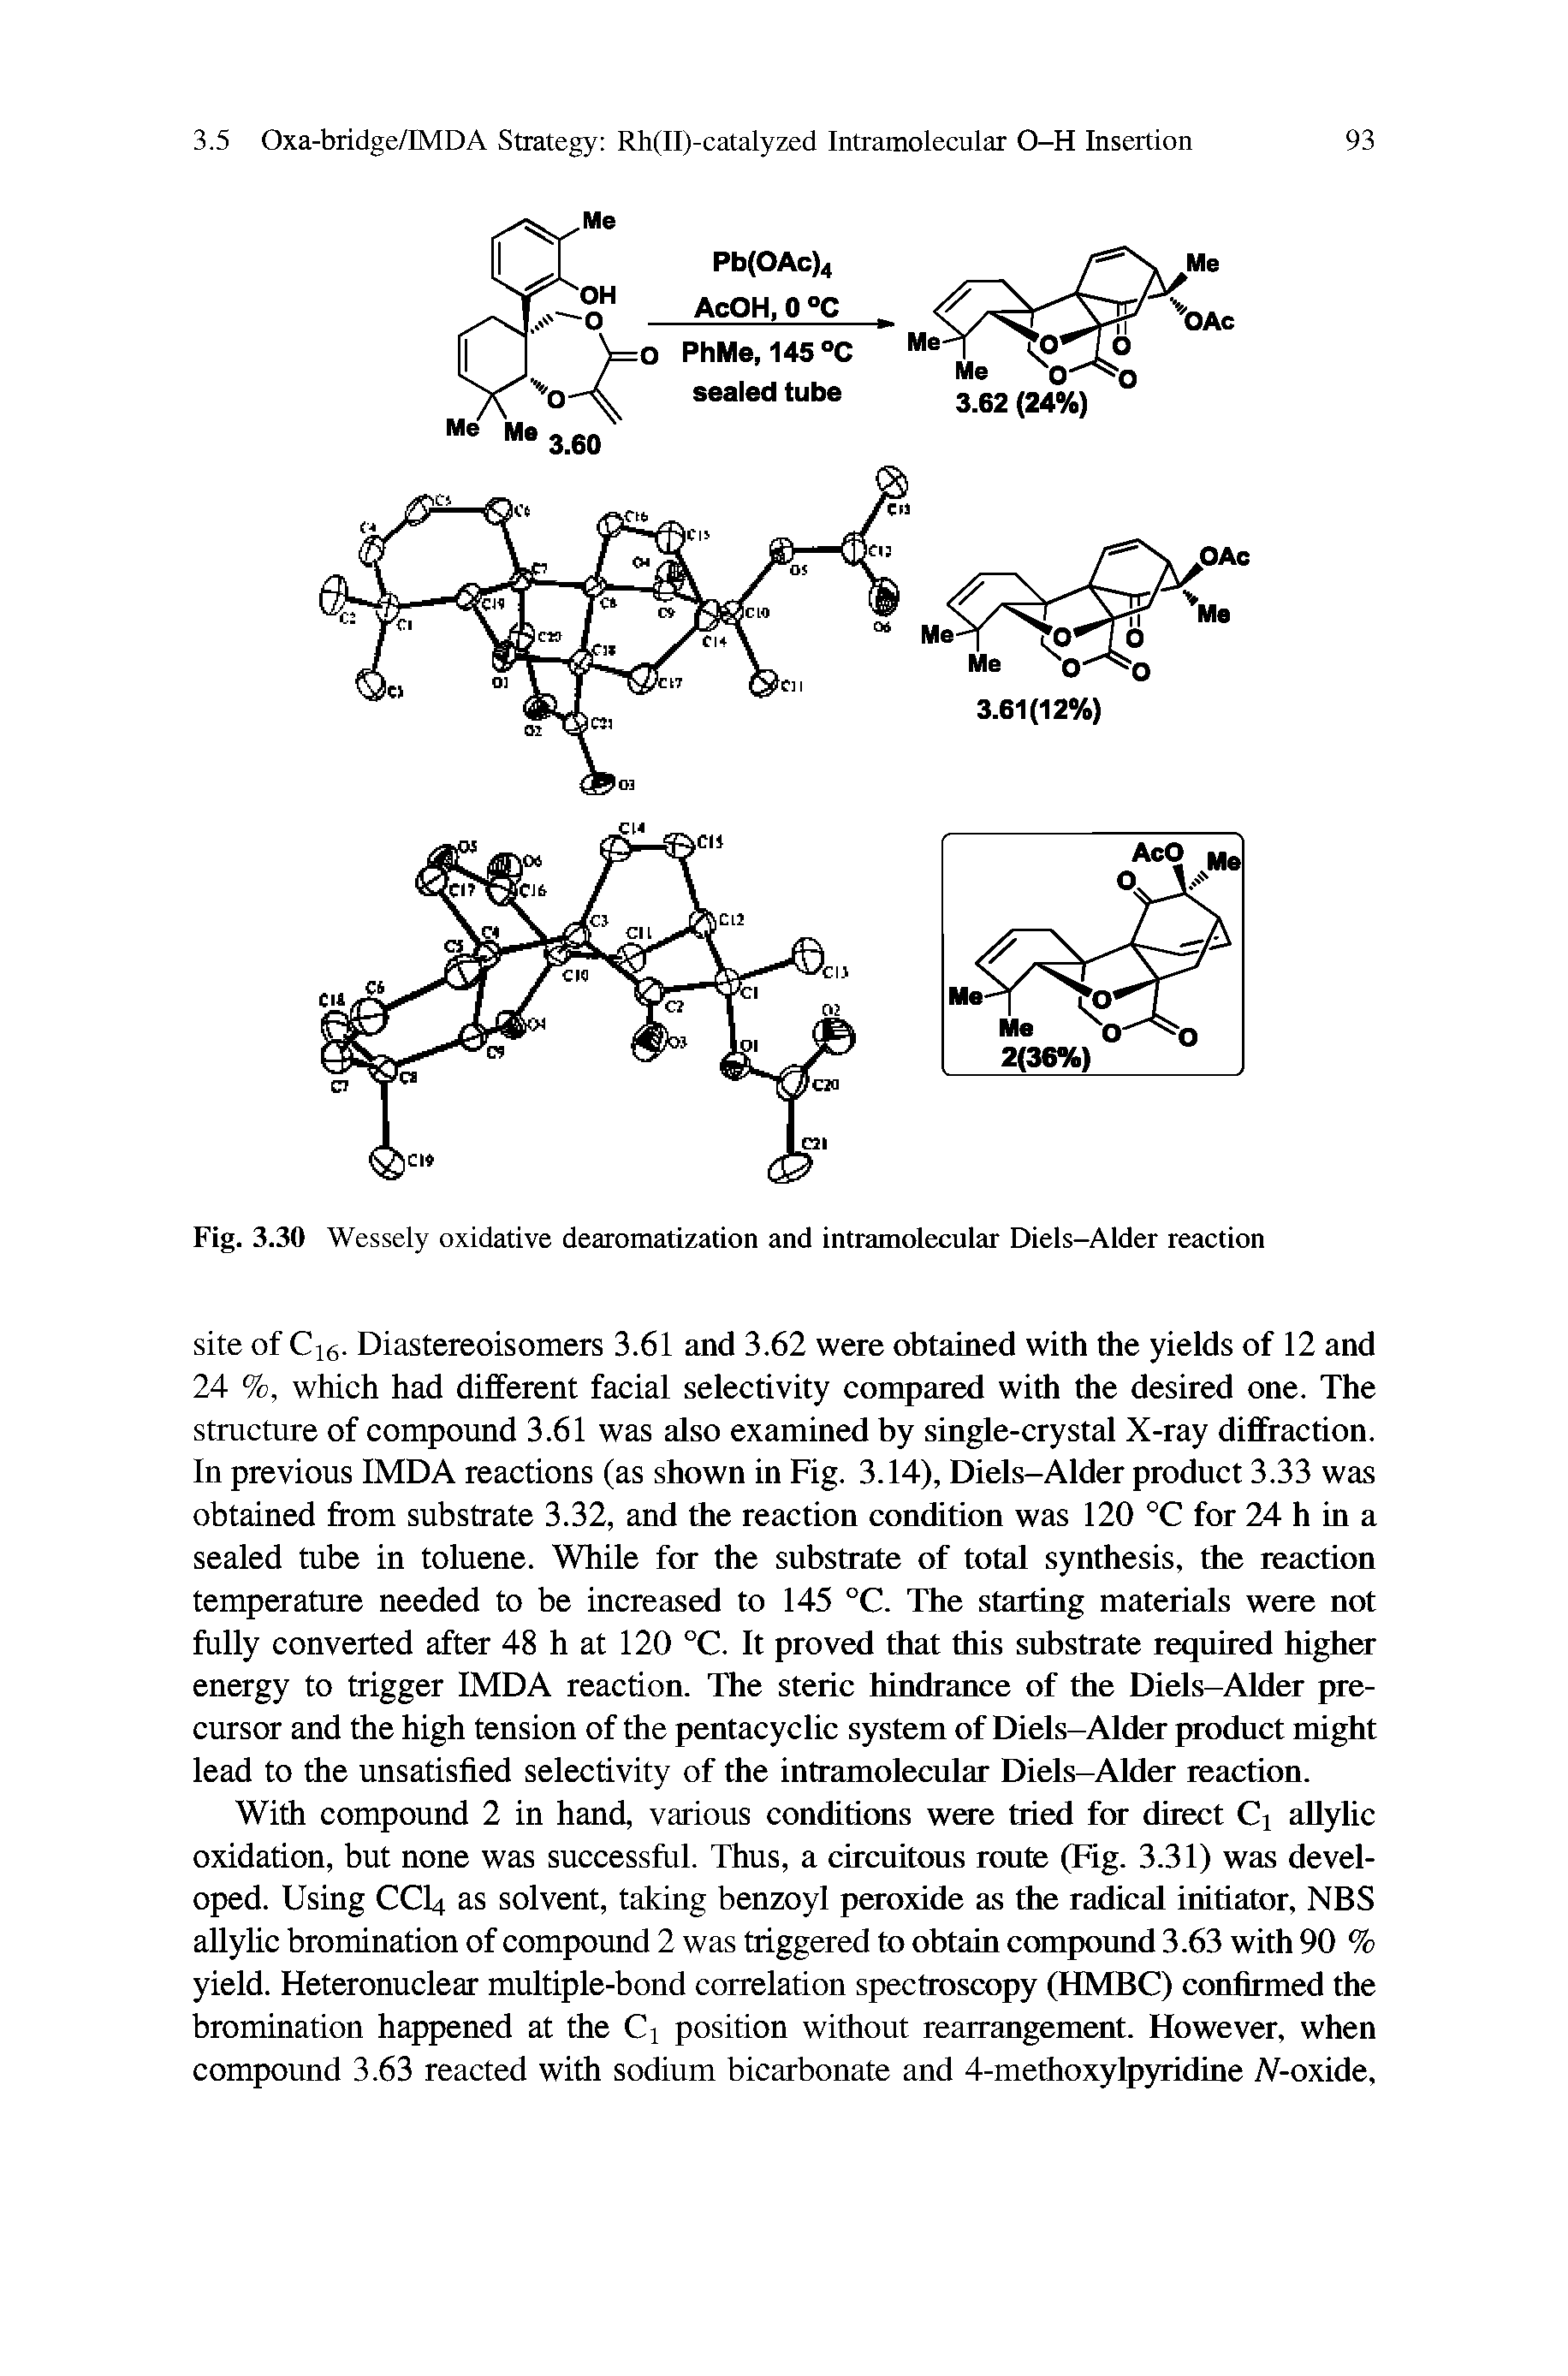 Fig. 3.30 Wessely oxidative dearomatization and intramolecular Diels-Alder reaction...